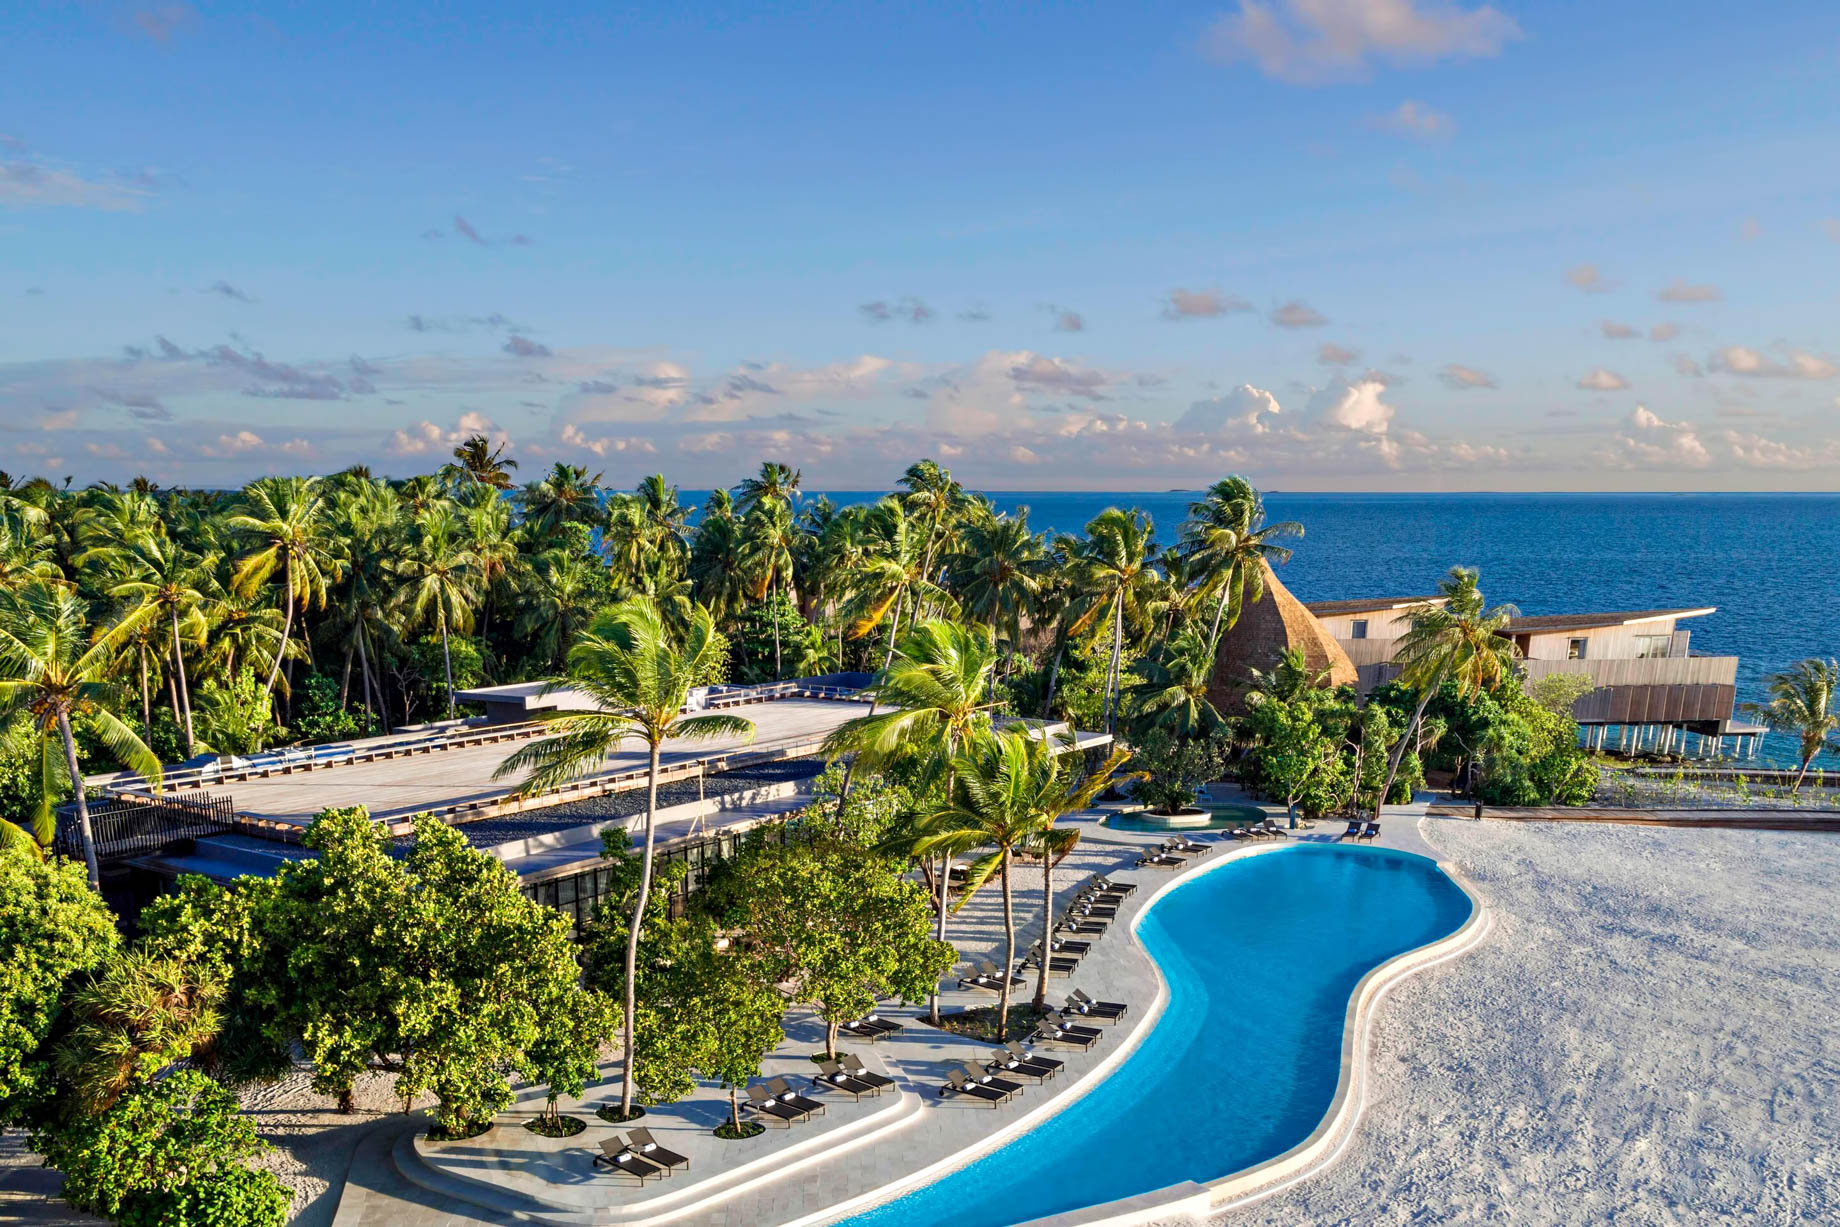 The St. Regis Maldives Vommuli Resort – Dhaalu Atoll, Maldives – Infinity Pool